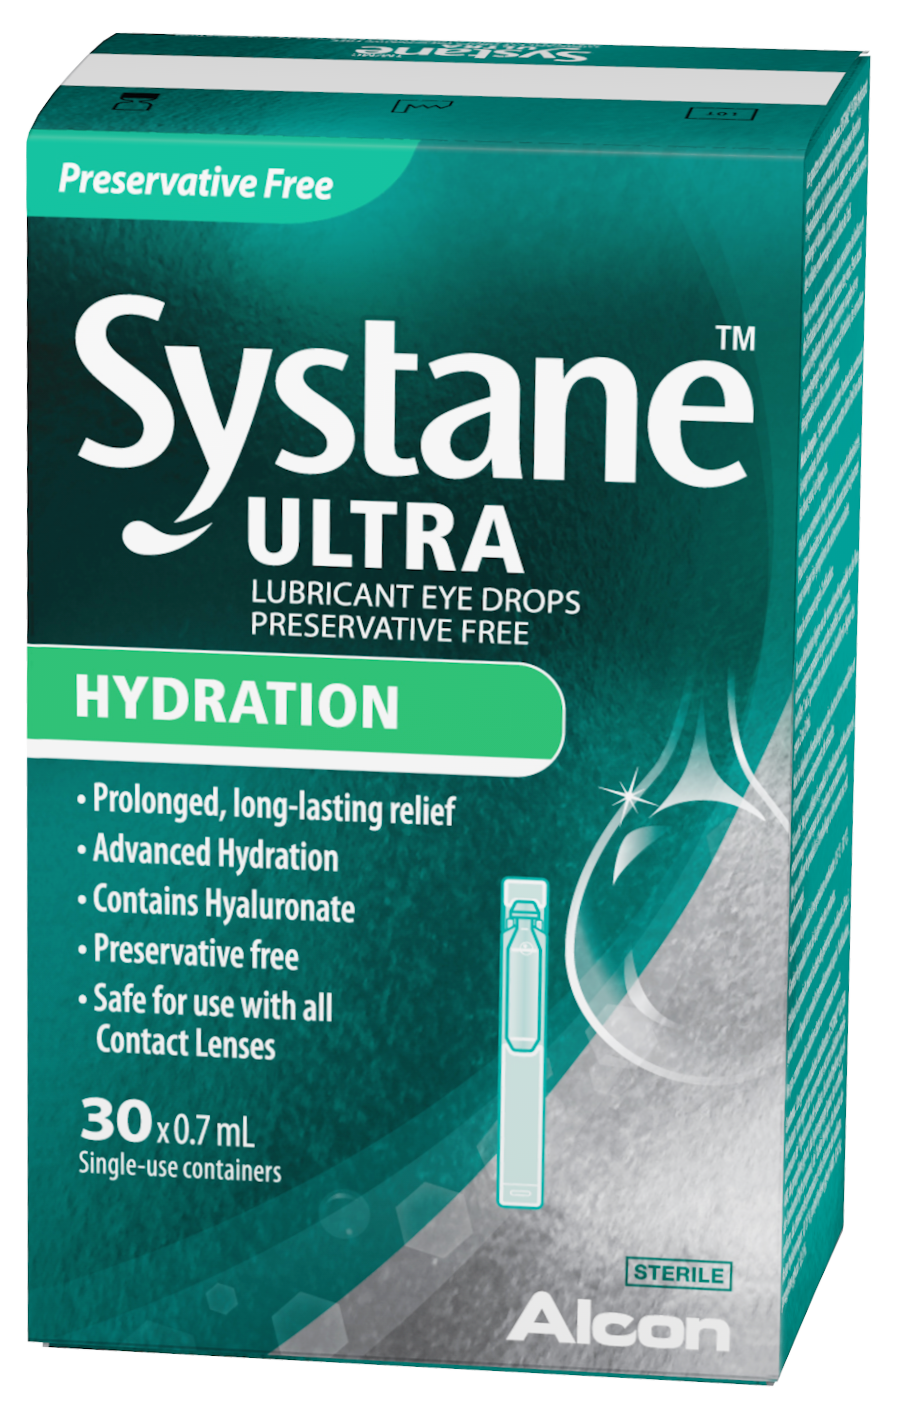 Systane ultra hydration preservative free lubricant eye drop